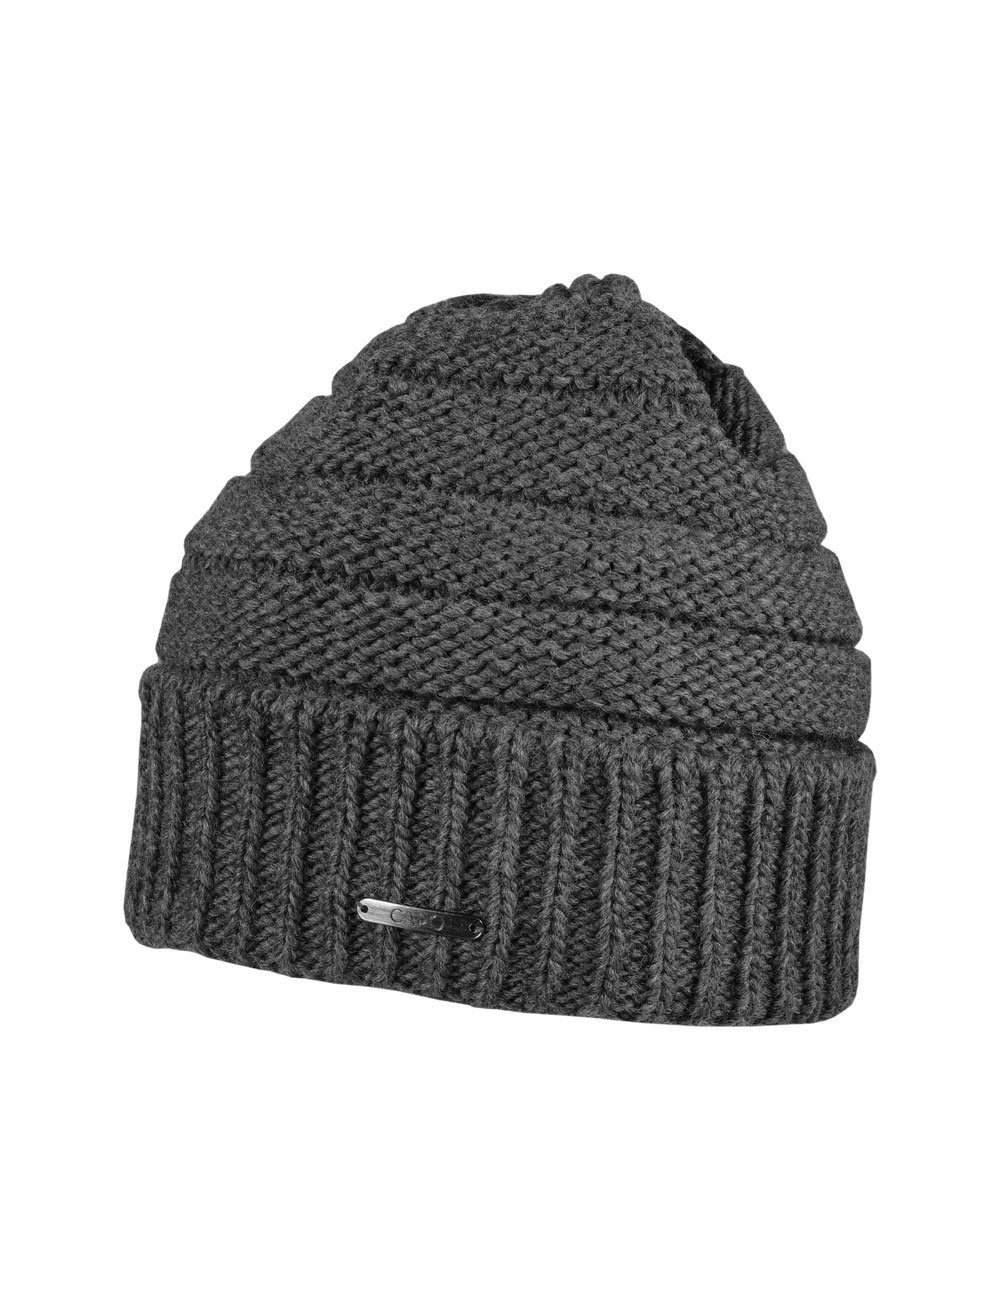 CAPO Strickmütze CAPO-PIPER CAP knitted cap, turn up, short fleece Made in Germany granite